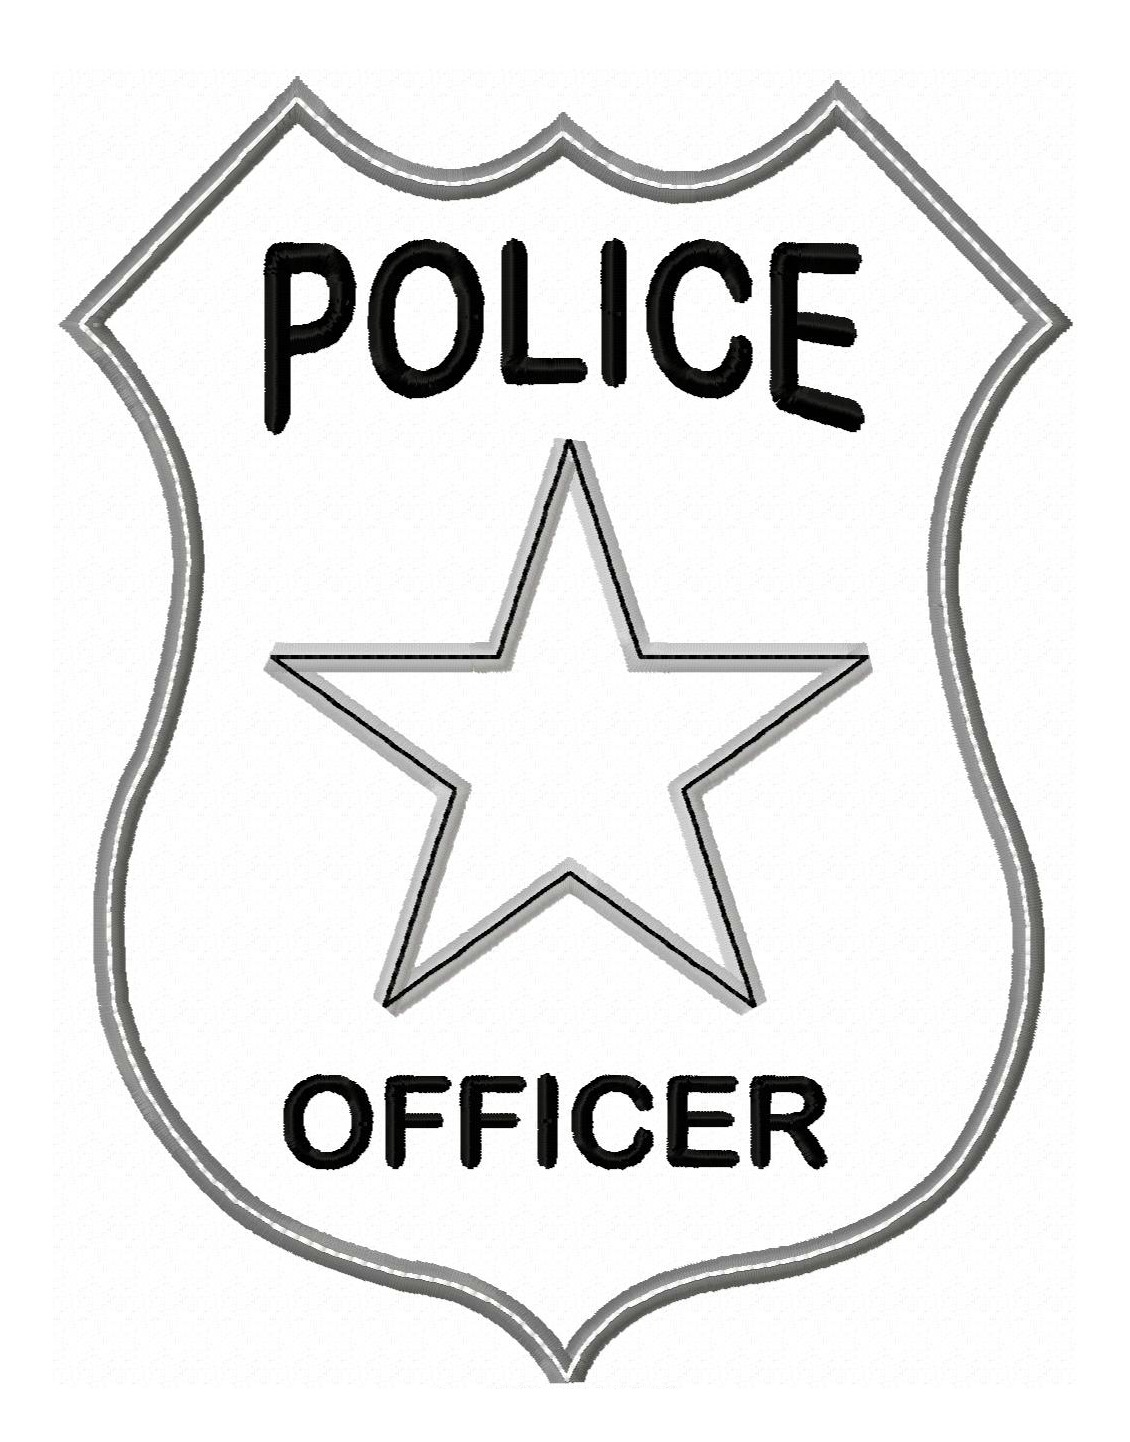 Police Officer Badge Clip Art - Gallery